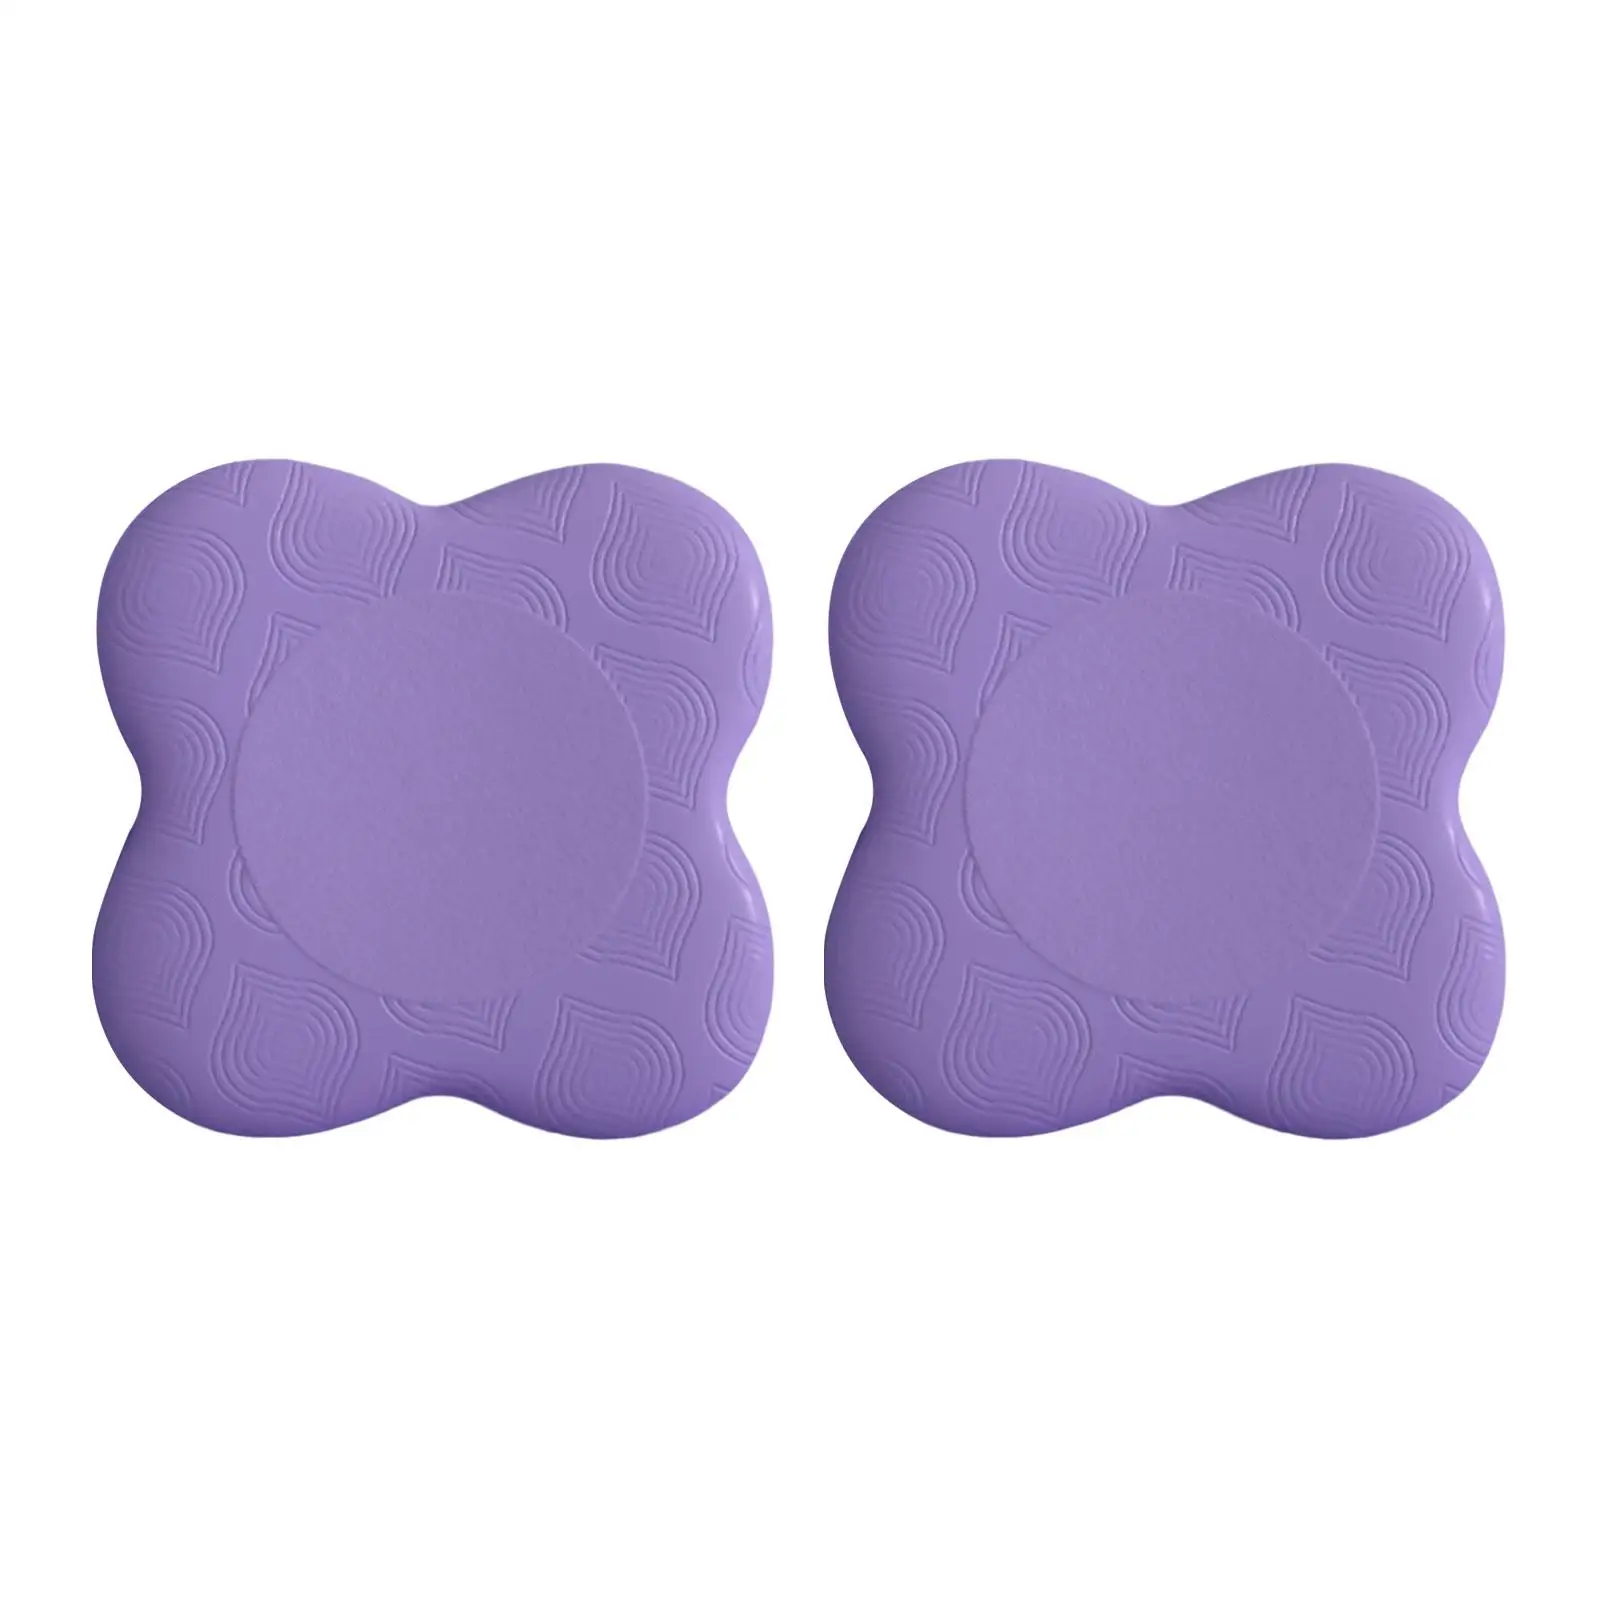 2x Yoga Knee Pad Cushion Non Slip Comfortable Yoga Mat Accessory Balance Cushion for Hands Knee Pilates Meditation Floor